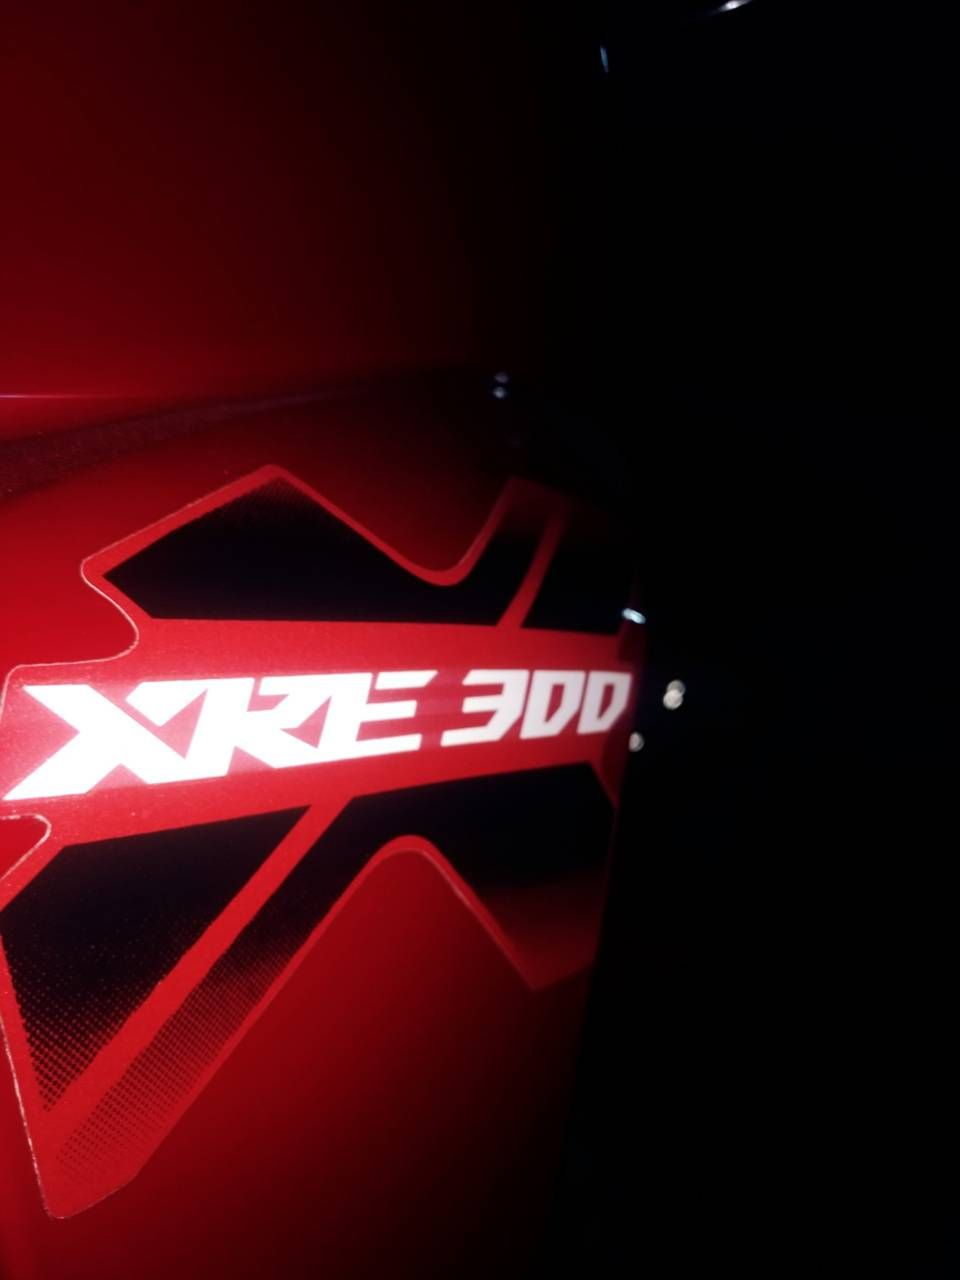 Honda XRE 300 Logo wallpaper